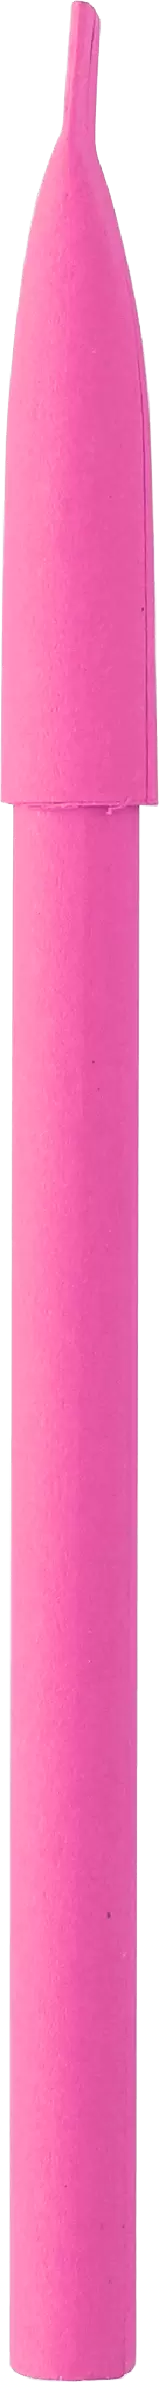 Ручка KRAFT Розовая 3010.10